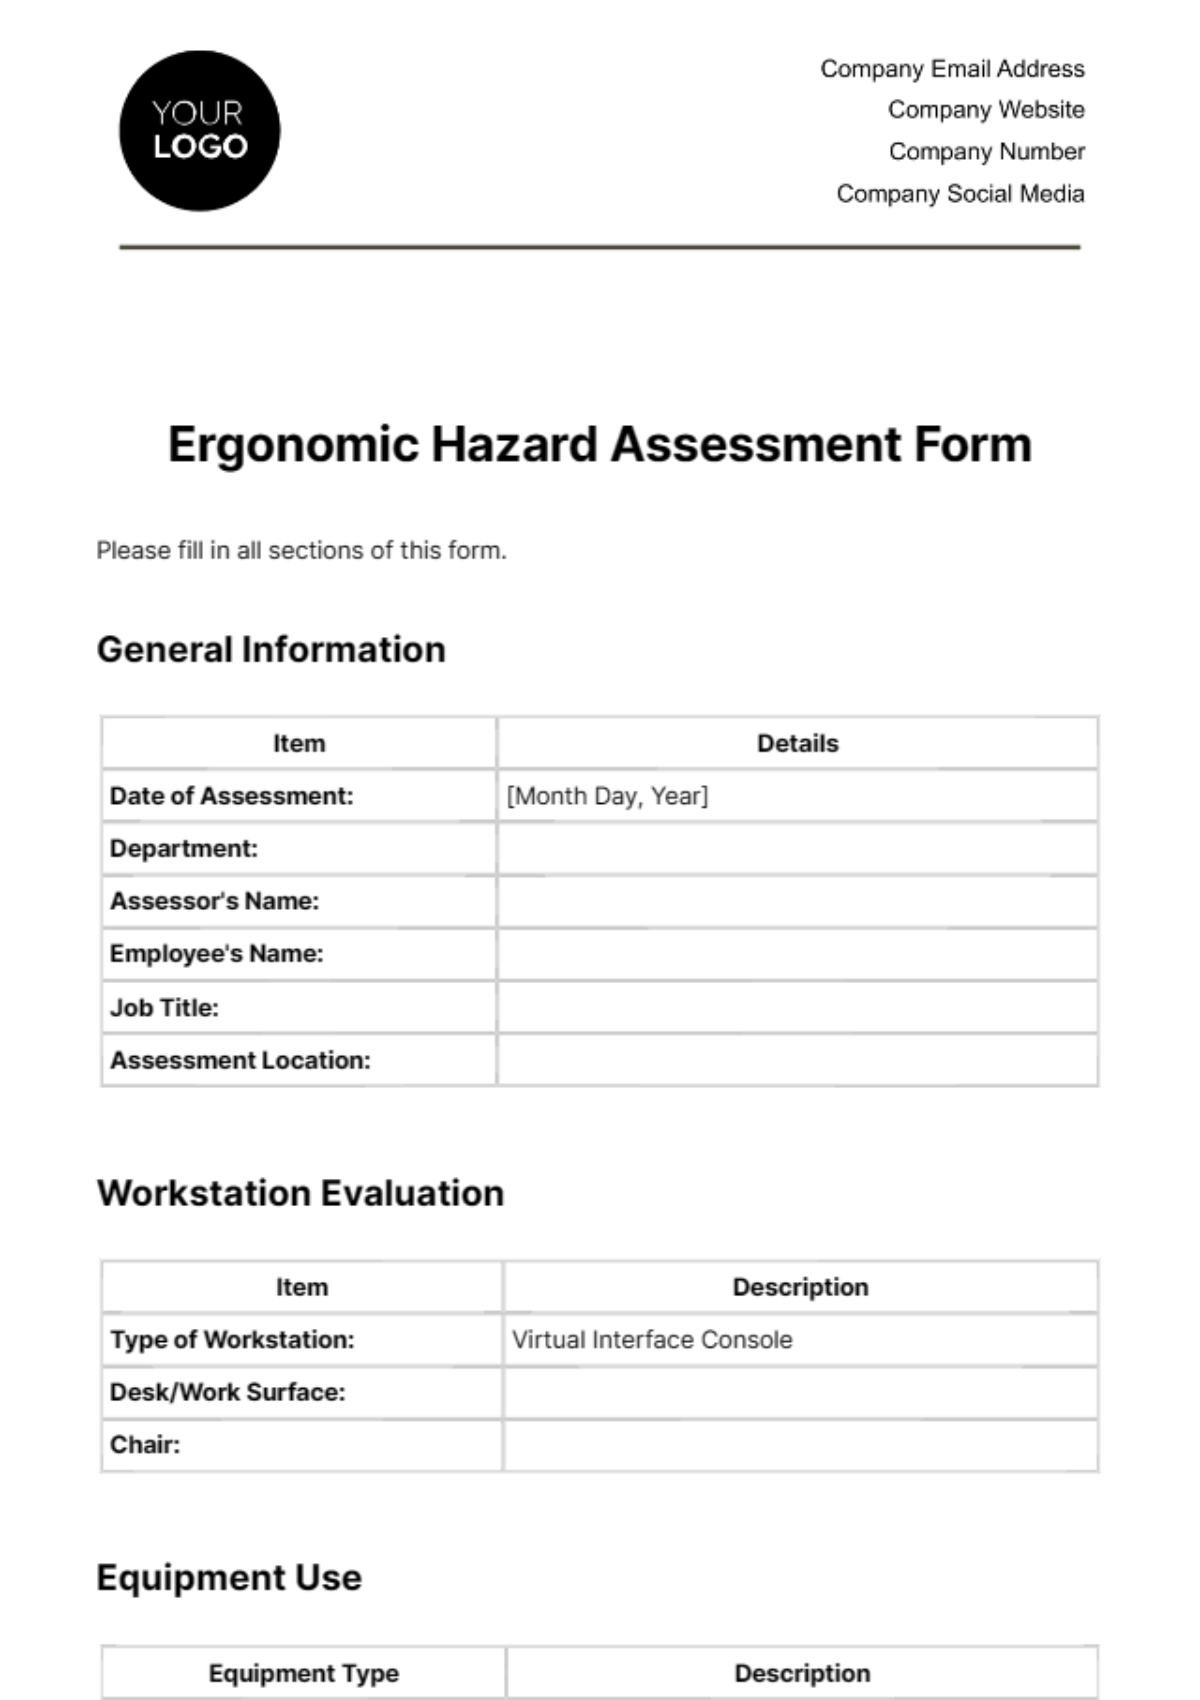 Ergonomic Hazard Assessment Form Template